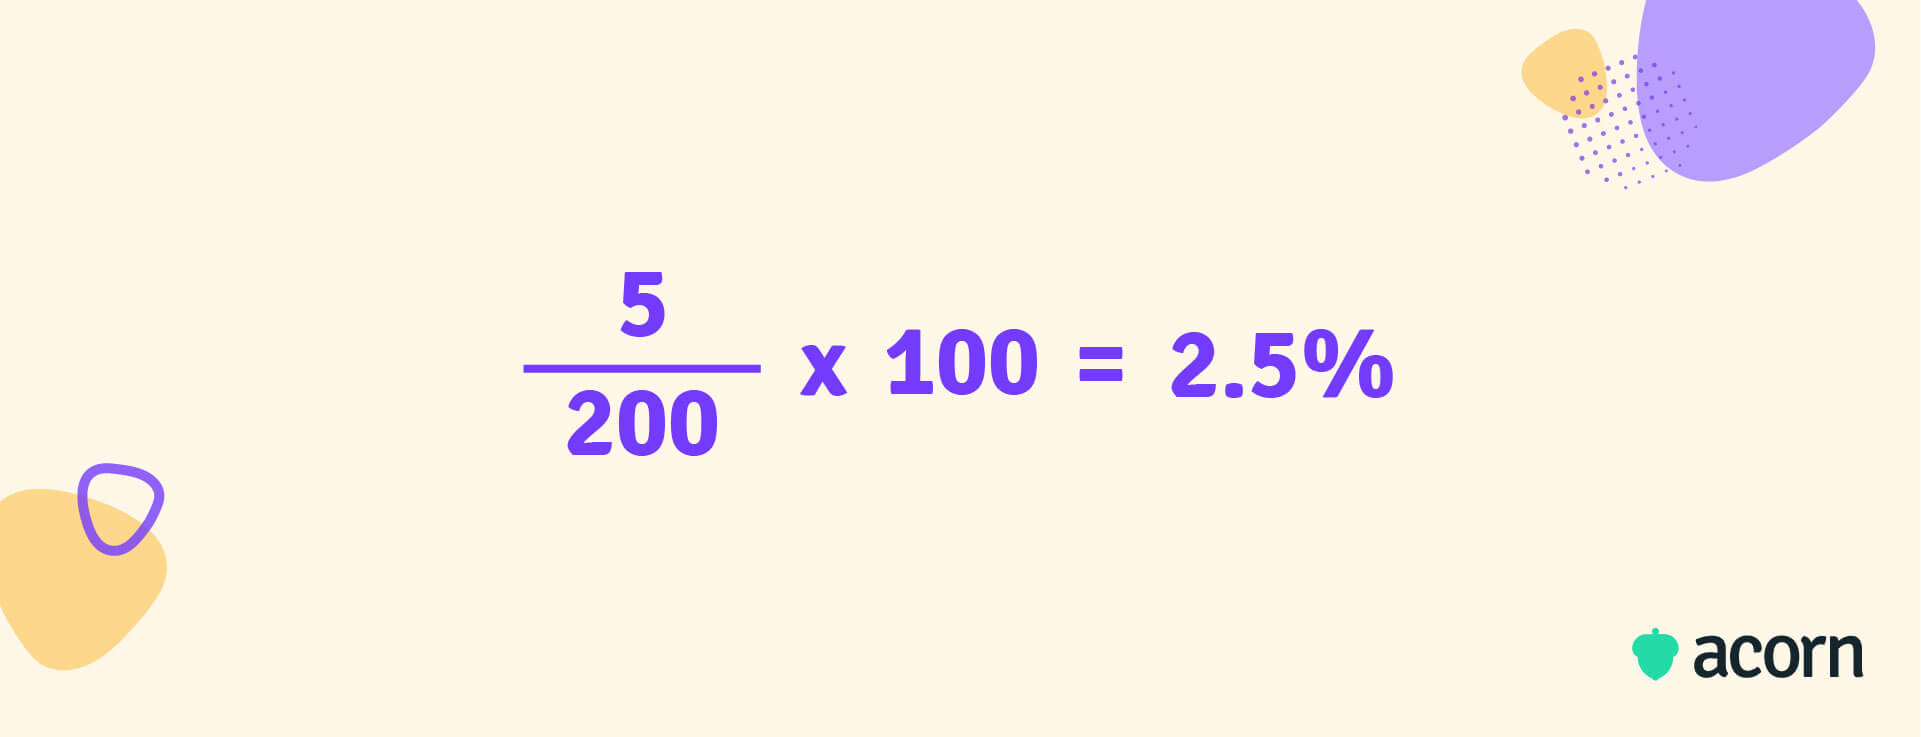 Example involuntary turnover rate formula: (5/200) x 100 = 2.5%